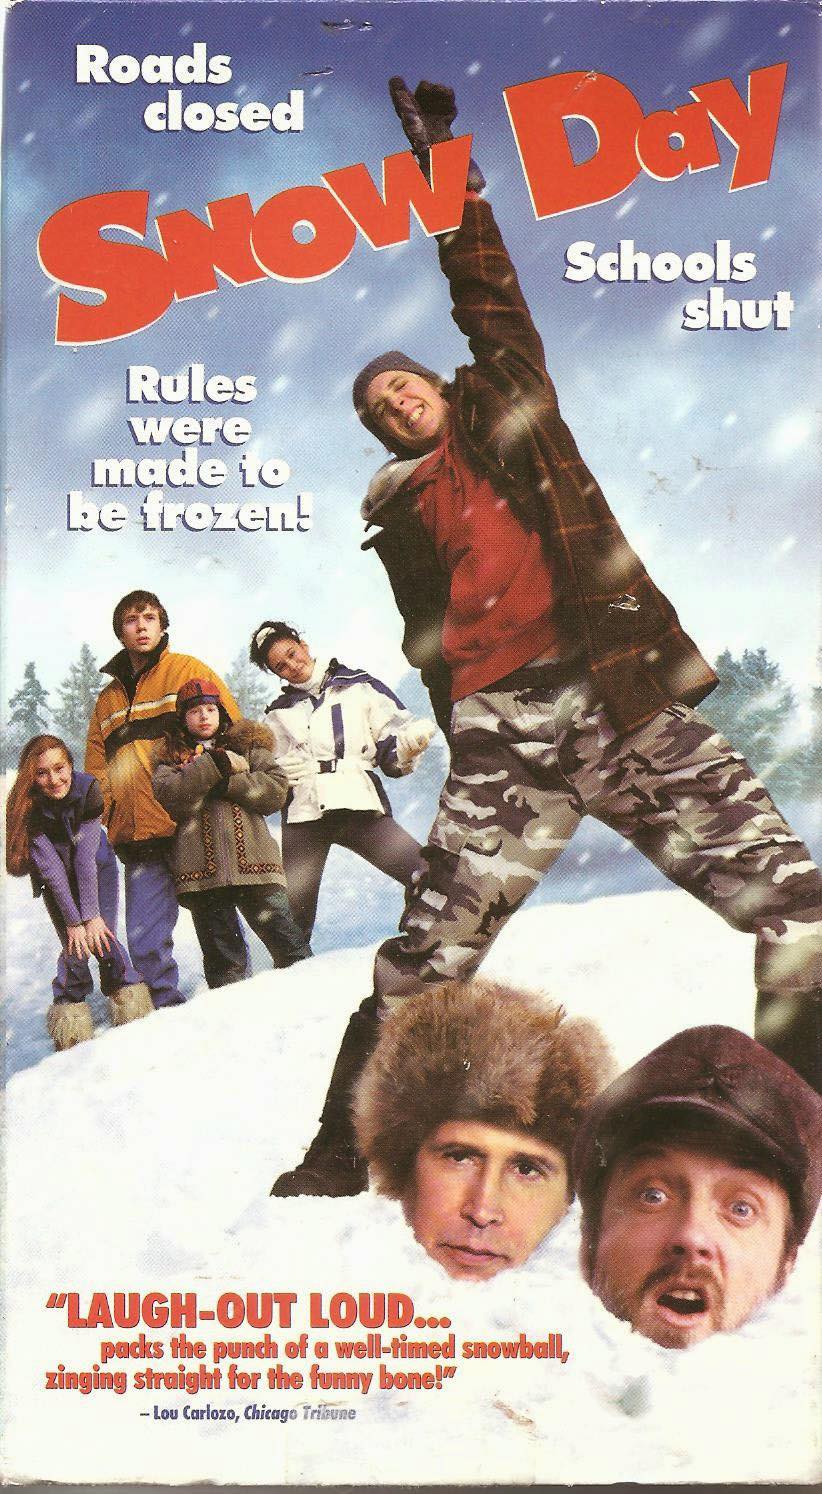 Snow Day VHS (2000)